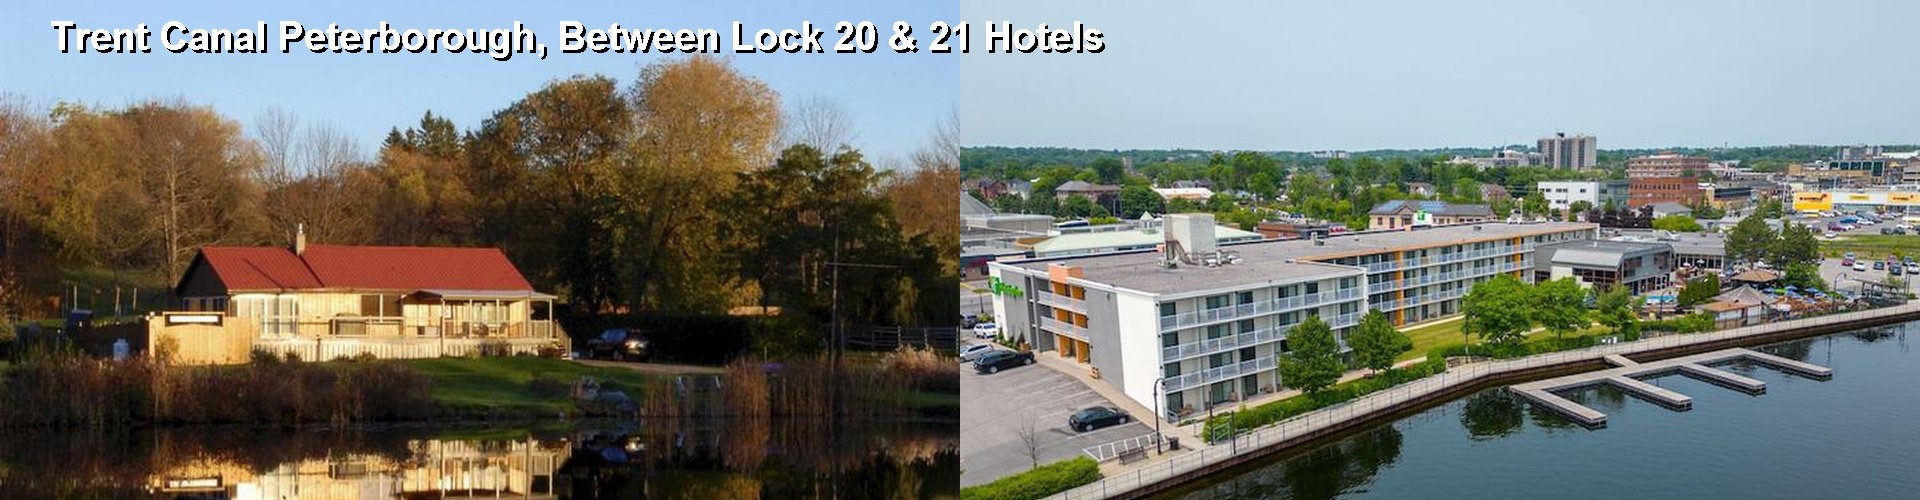 5 Best Hotels near Trent Canal Peterborough, Between Lock 20 & 21